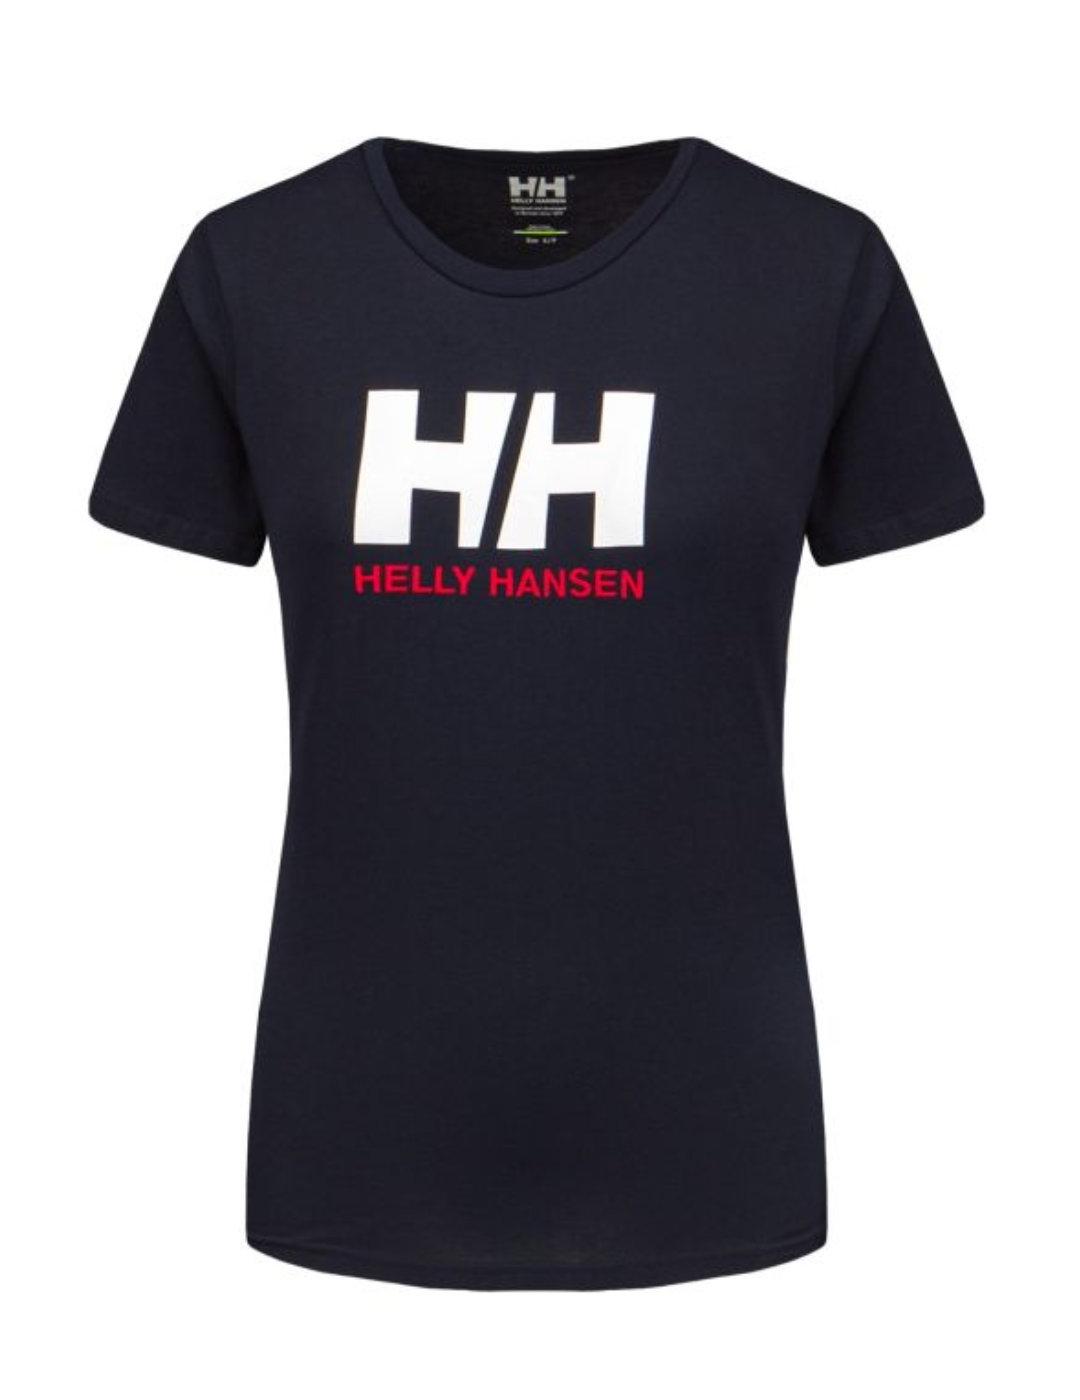 Camiseta Helly Hansen logo azul marino manga corta de mujer